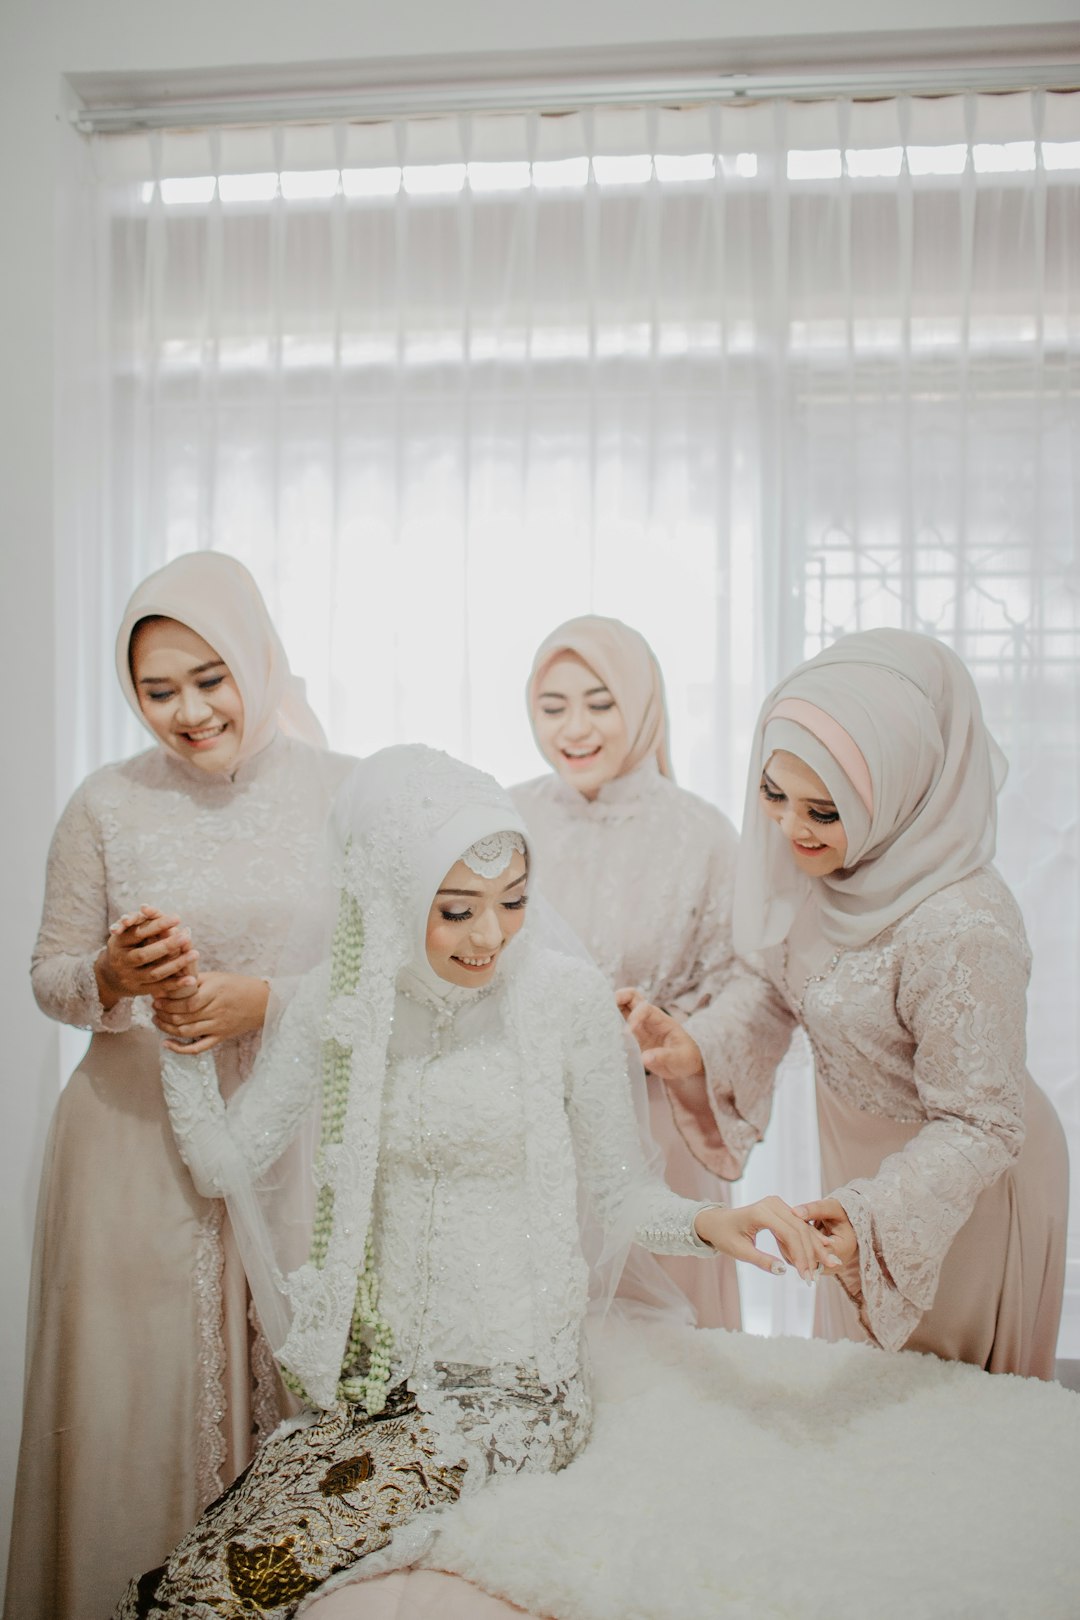 women in white hijab standing near white curtain